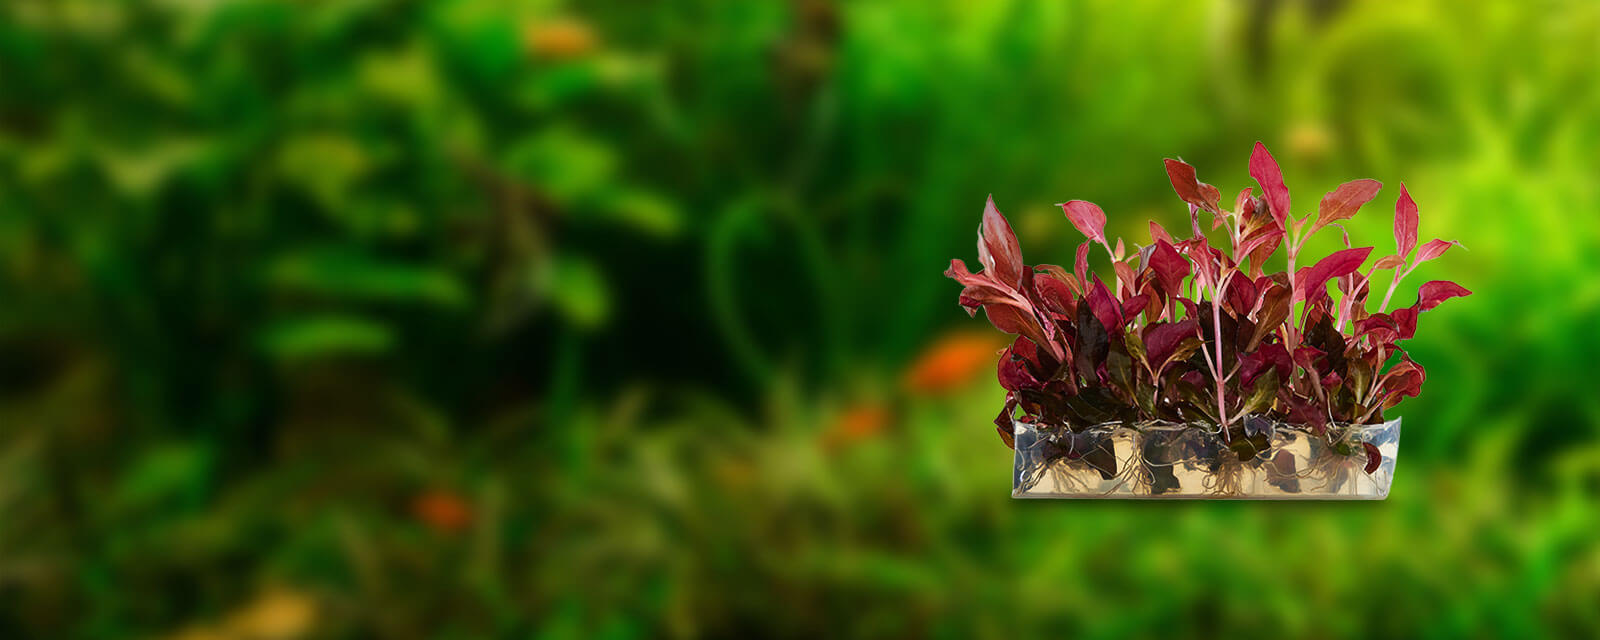 reddish aquatic plants in tray of water